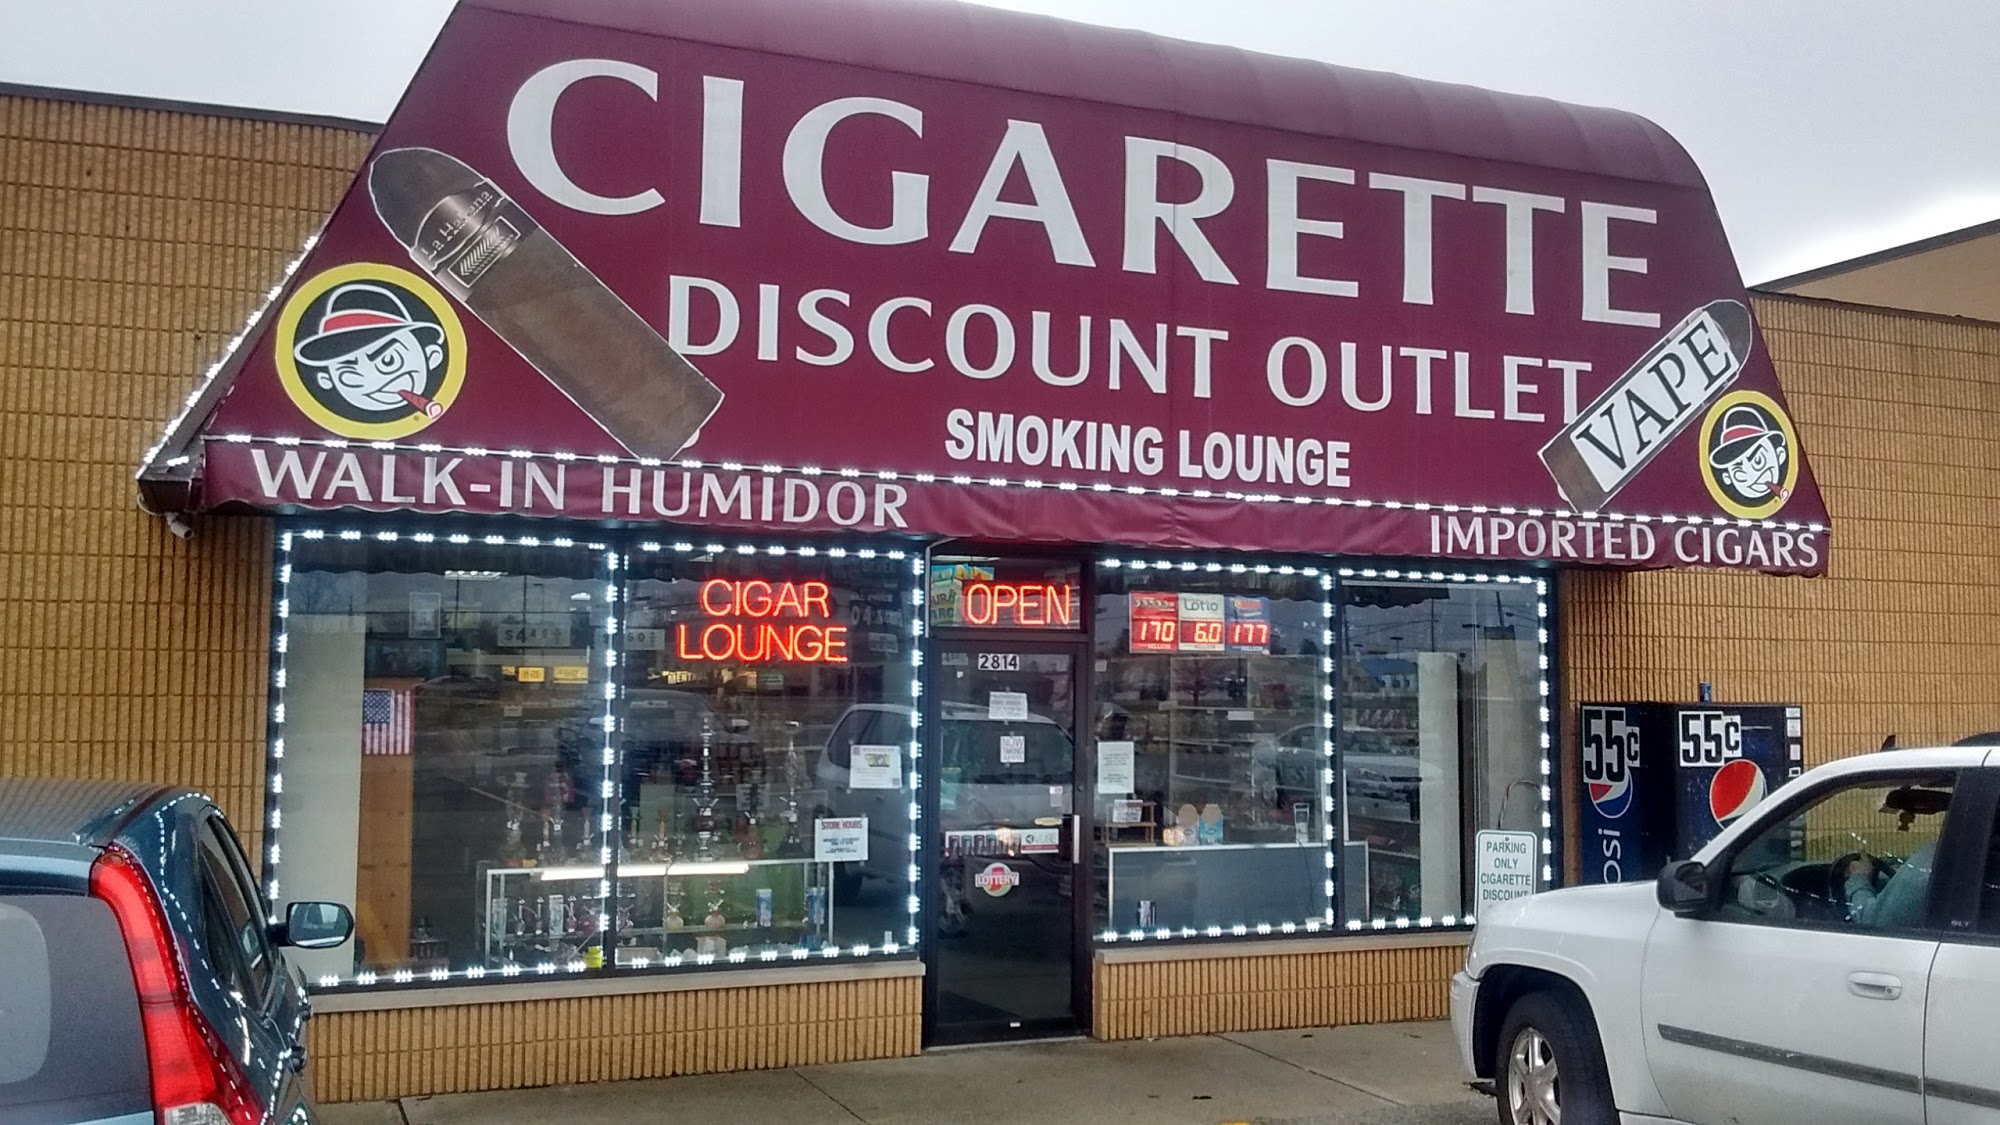 Cigarette Discount Outlet